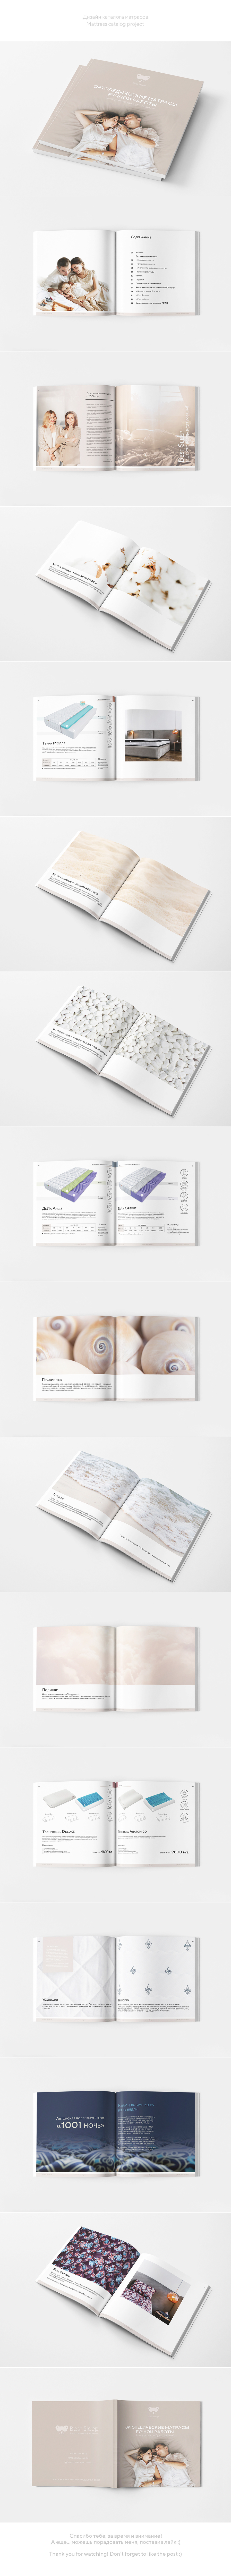 design cataloguedesign catalogdesign magazinedesign branding  graphicdesign InDesign mattress sleep каталог